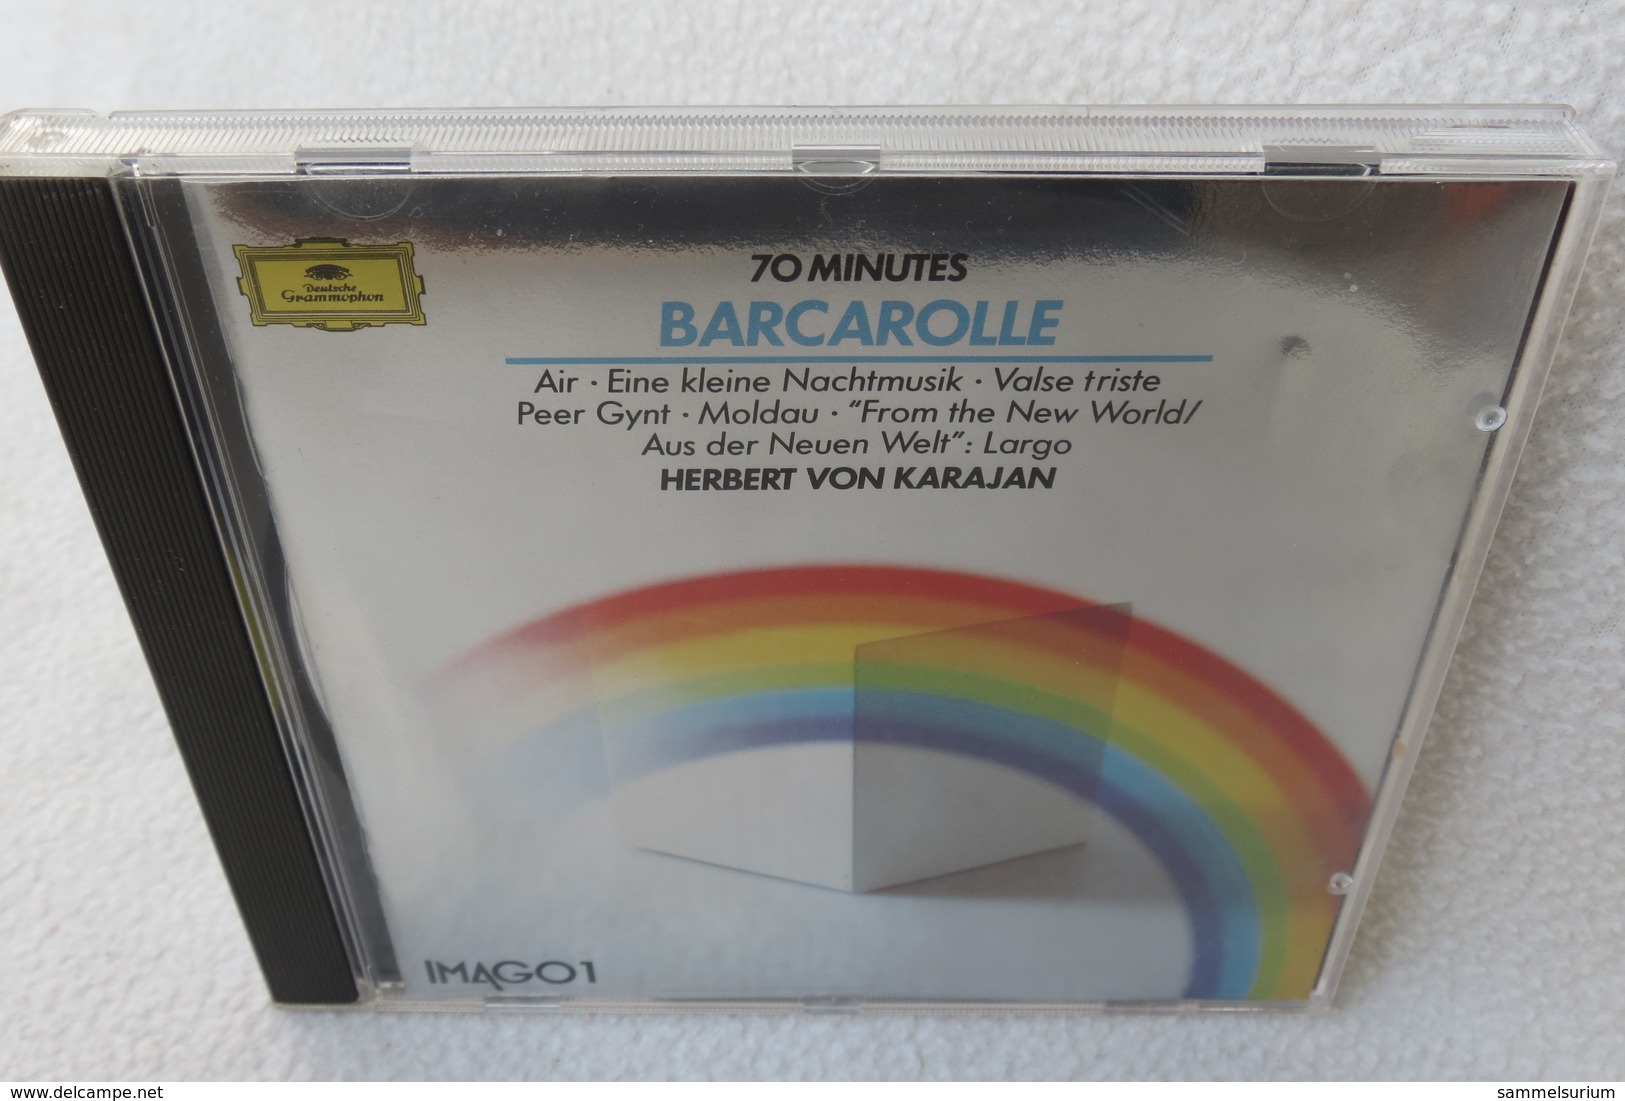 CD "Barcarolle" Imago 1, Herbert Von Karajan - Classica